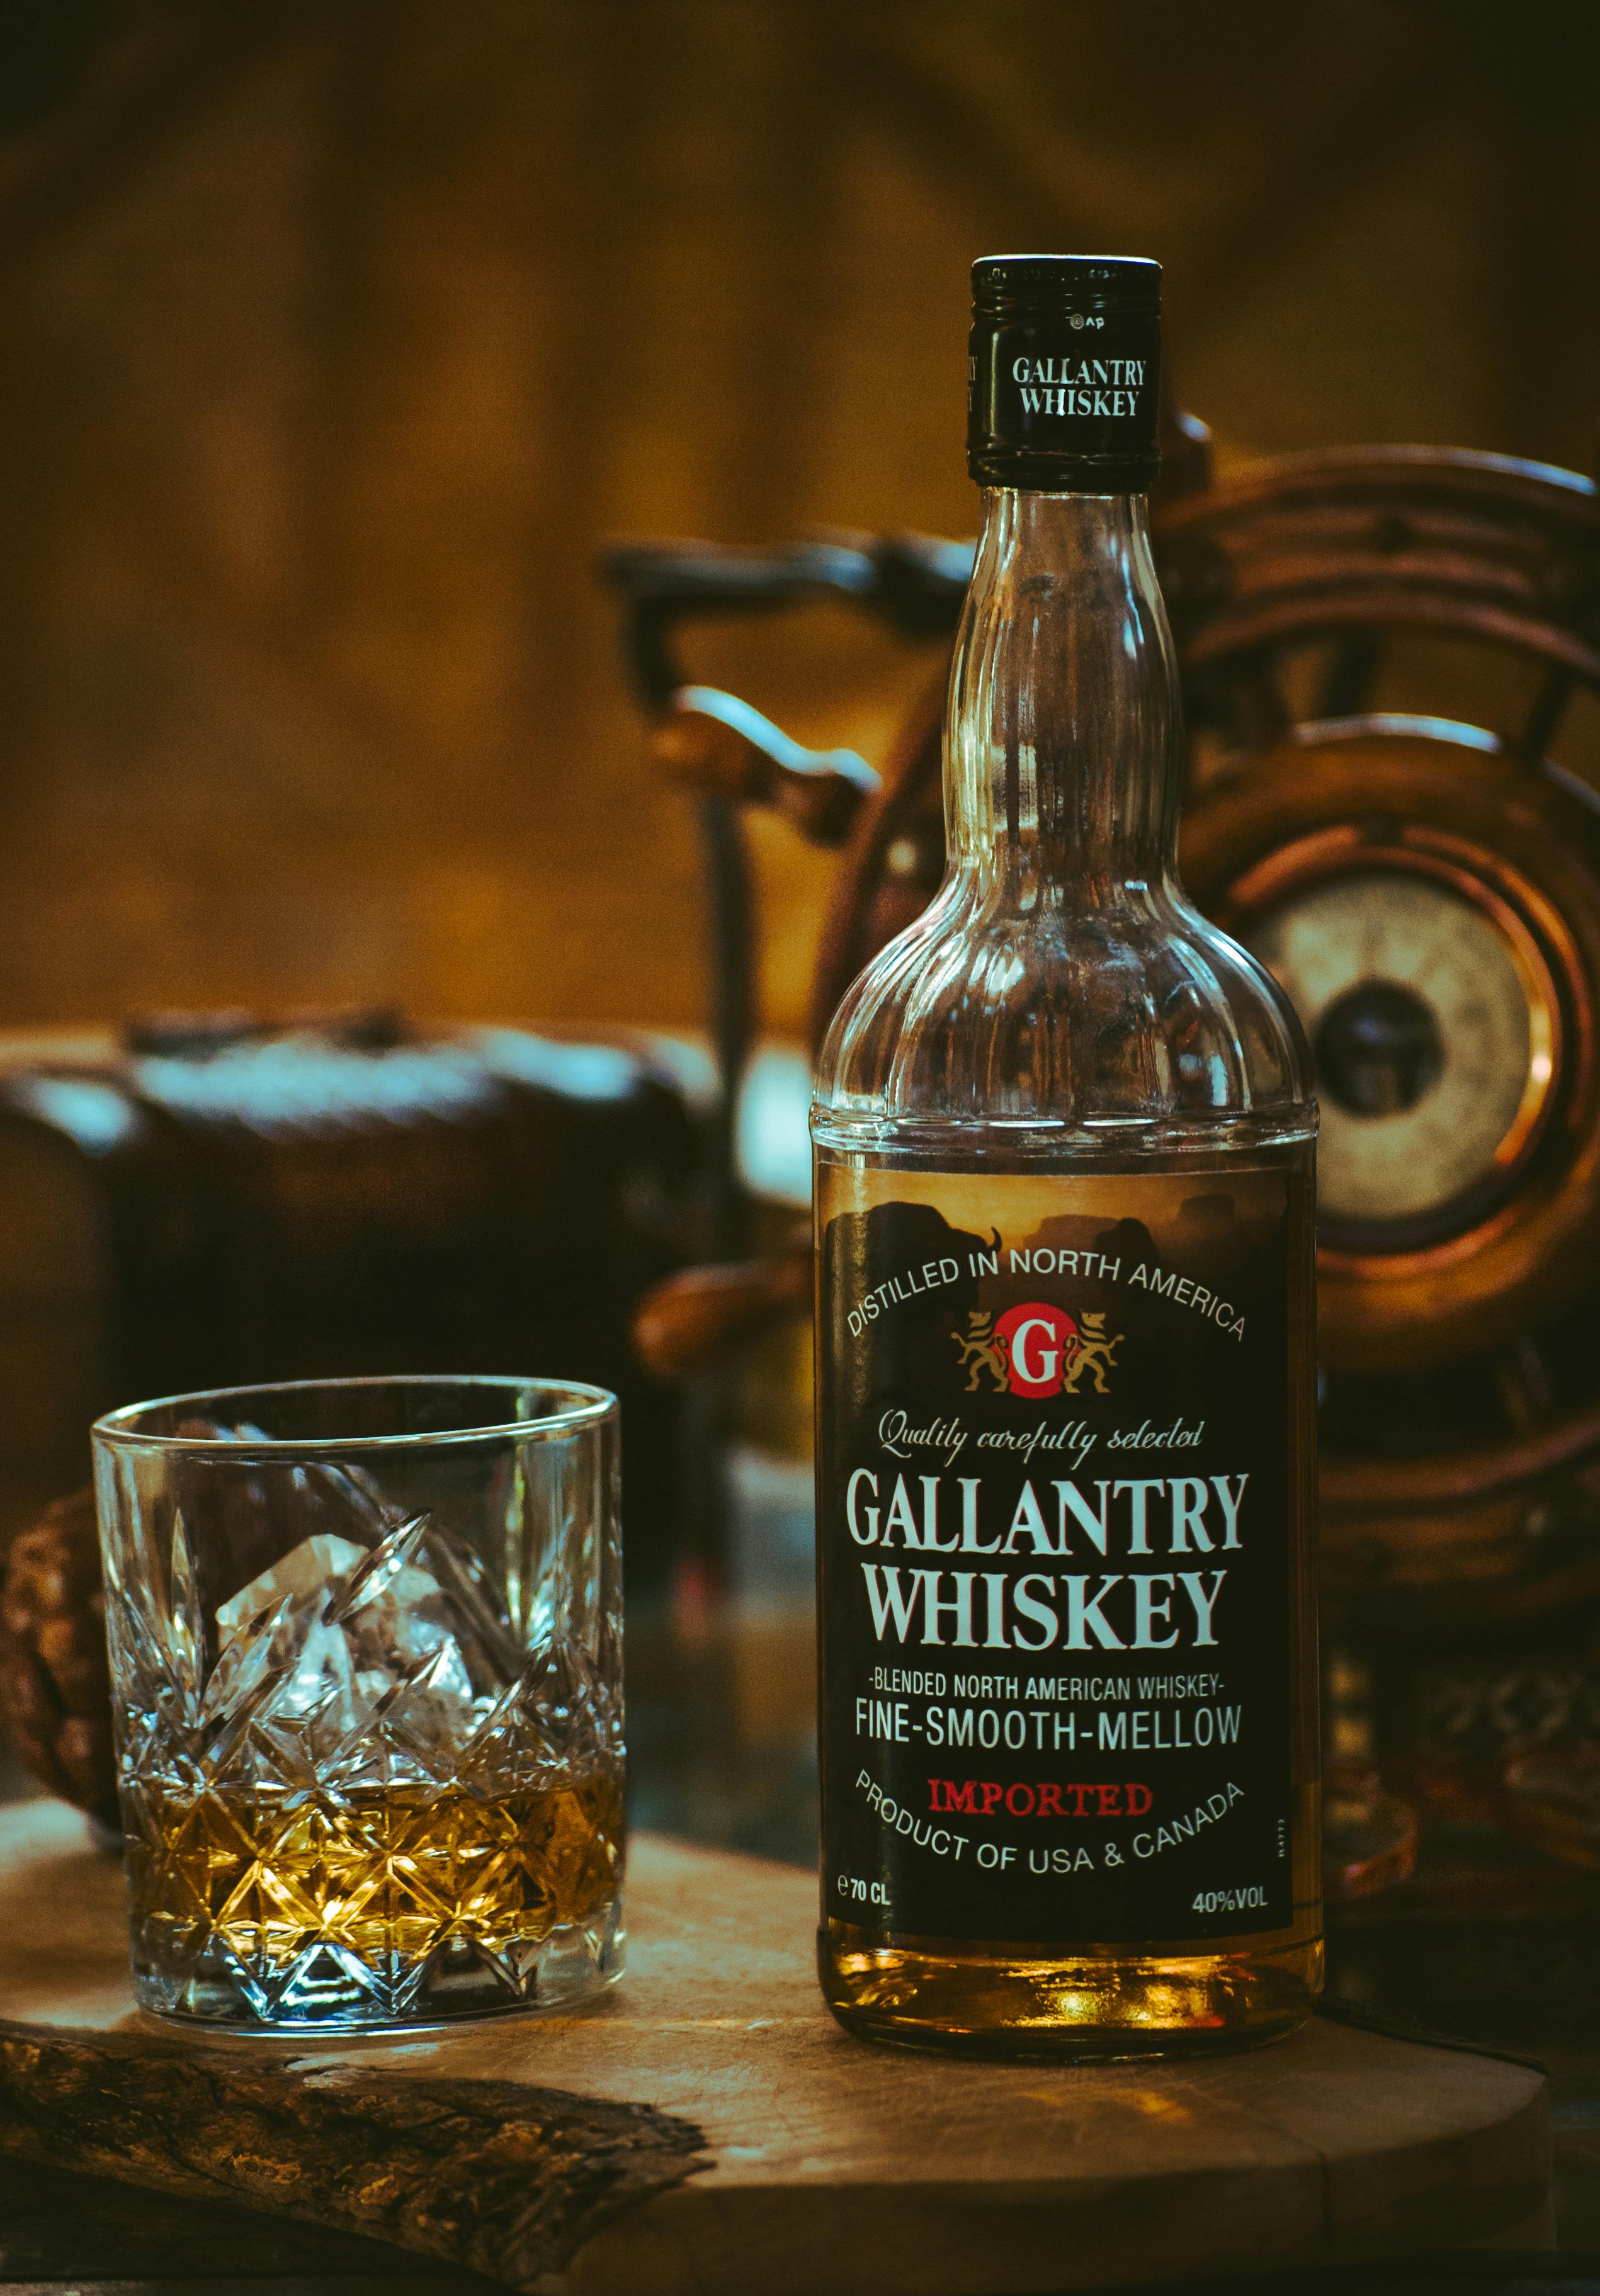 Gallantry Whiskey Bottle Beside Glass Free Stock Photo